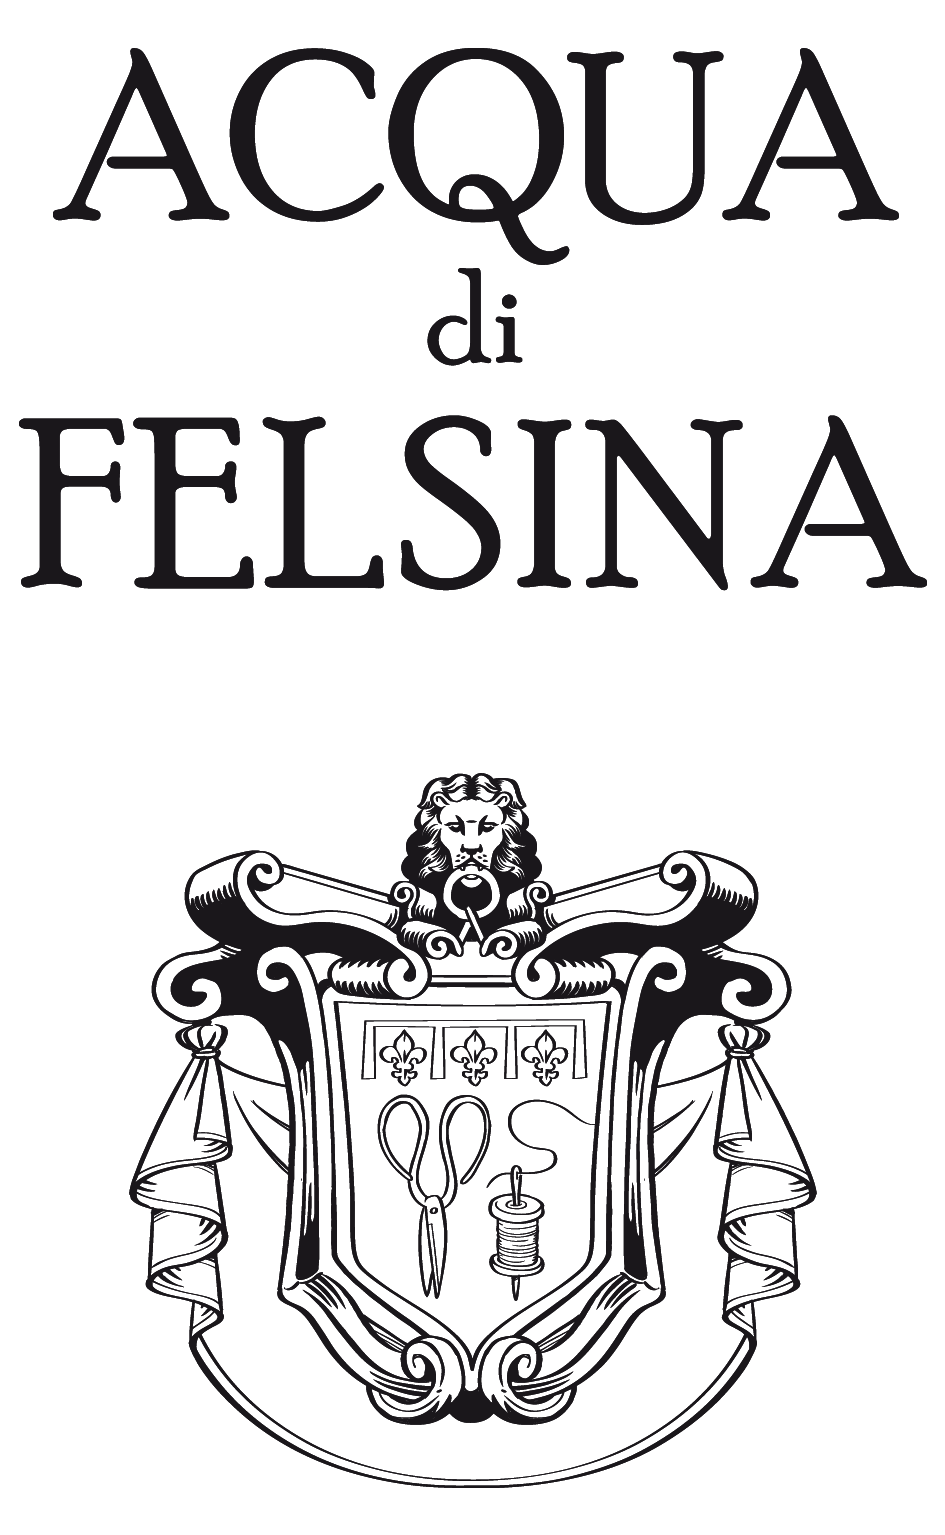 Acqua di Felsina Bologna 